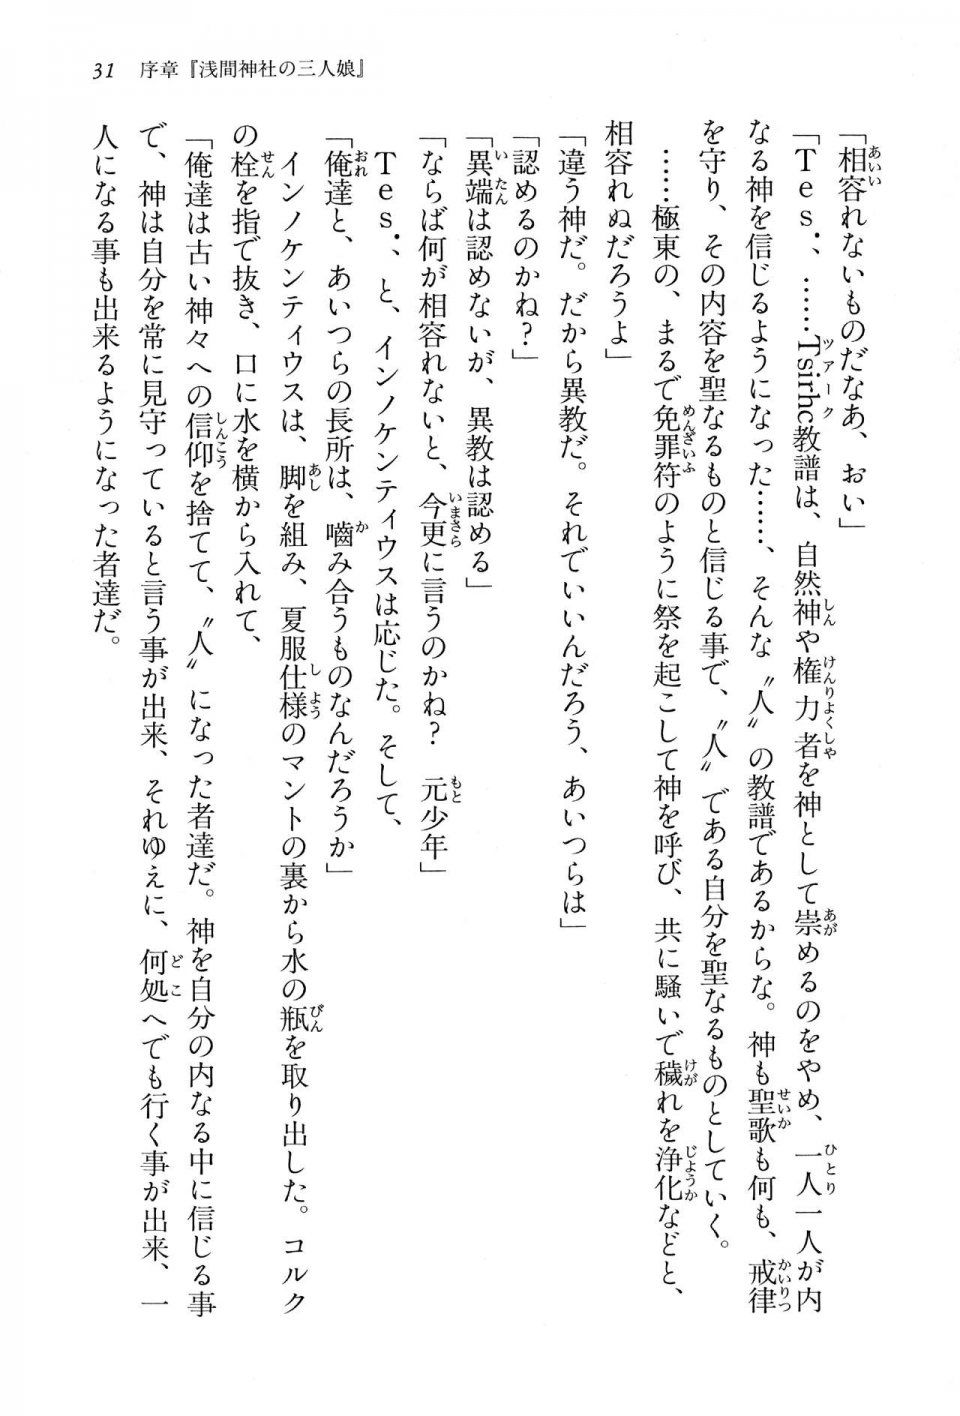 Kyoukai Senjou no Horizon BD Special Mininovel Vol 1(1A) - Photo #35